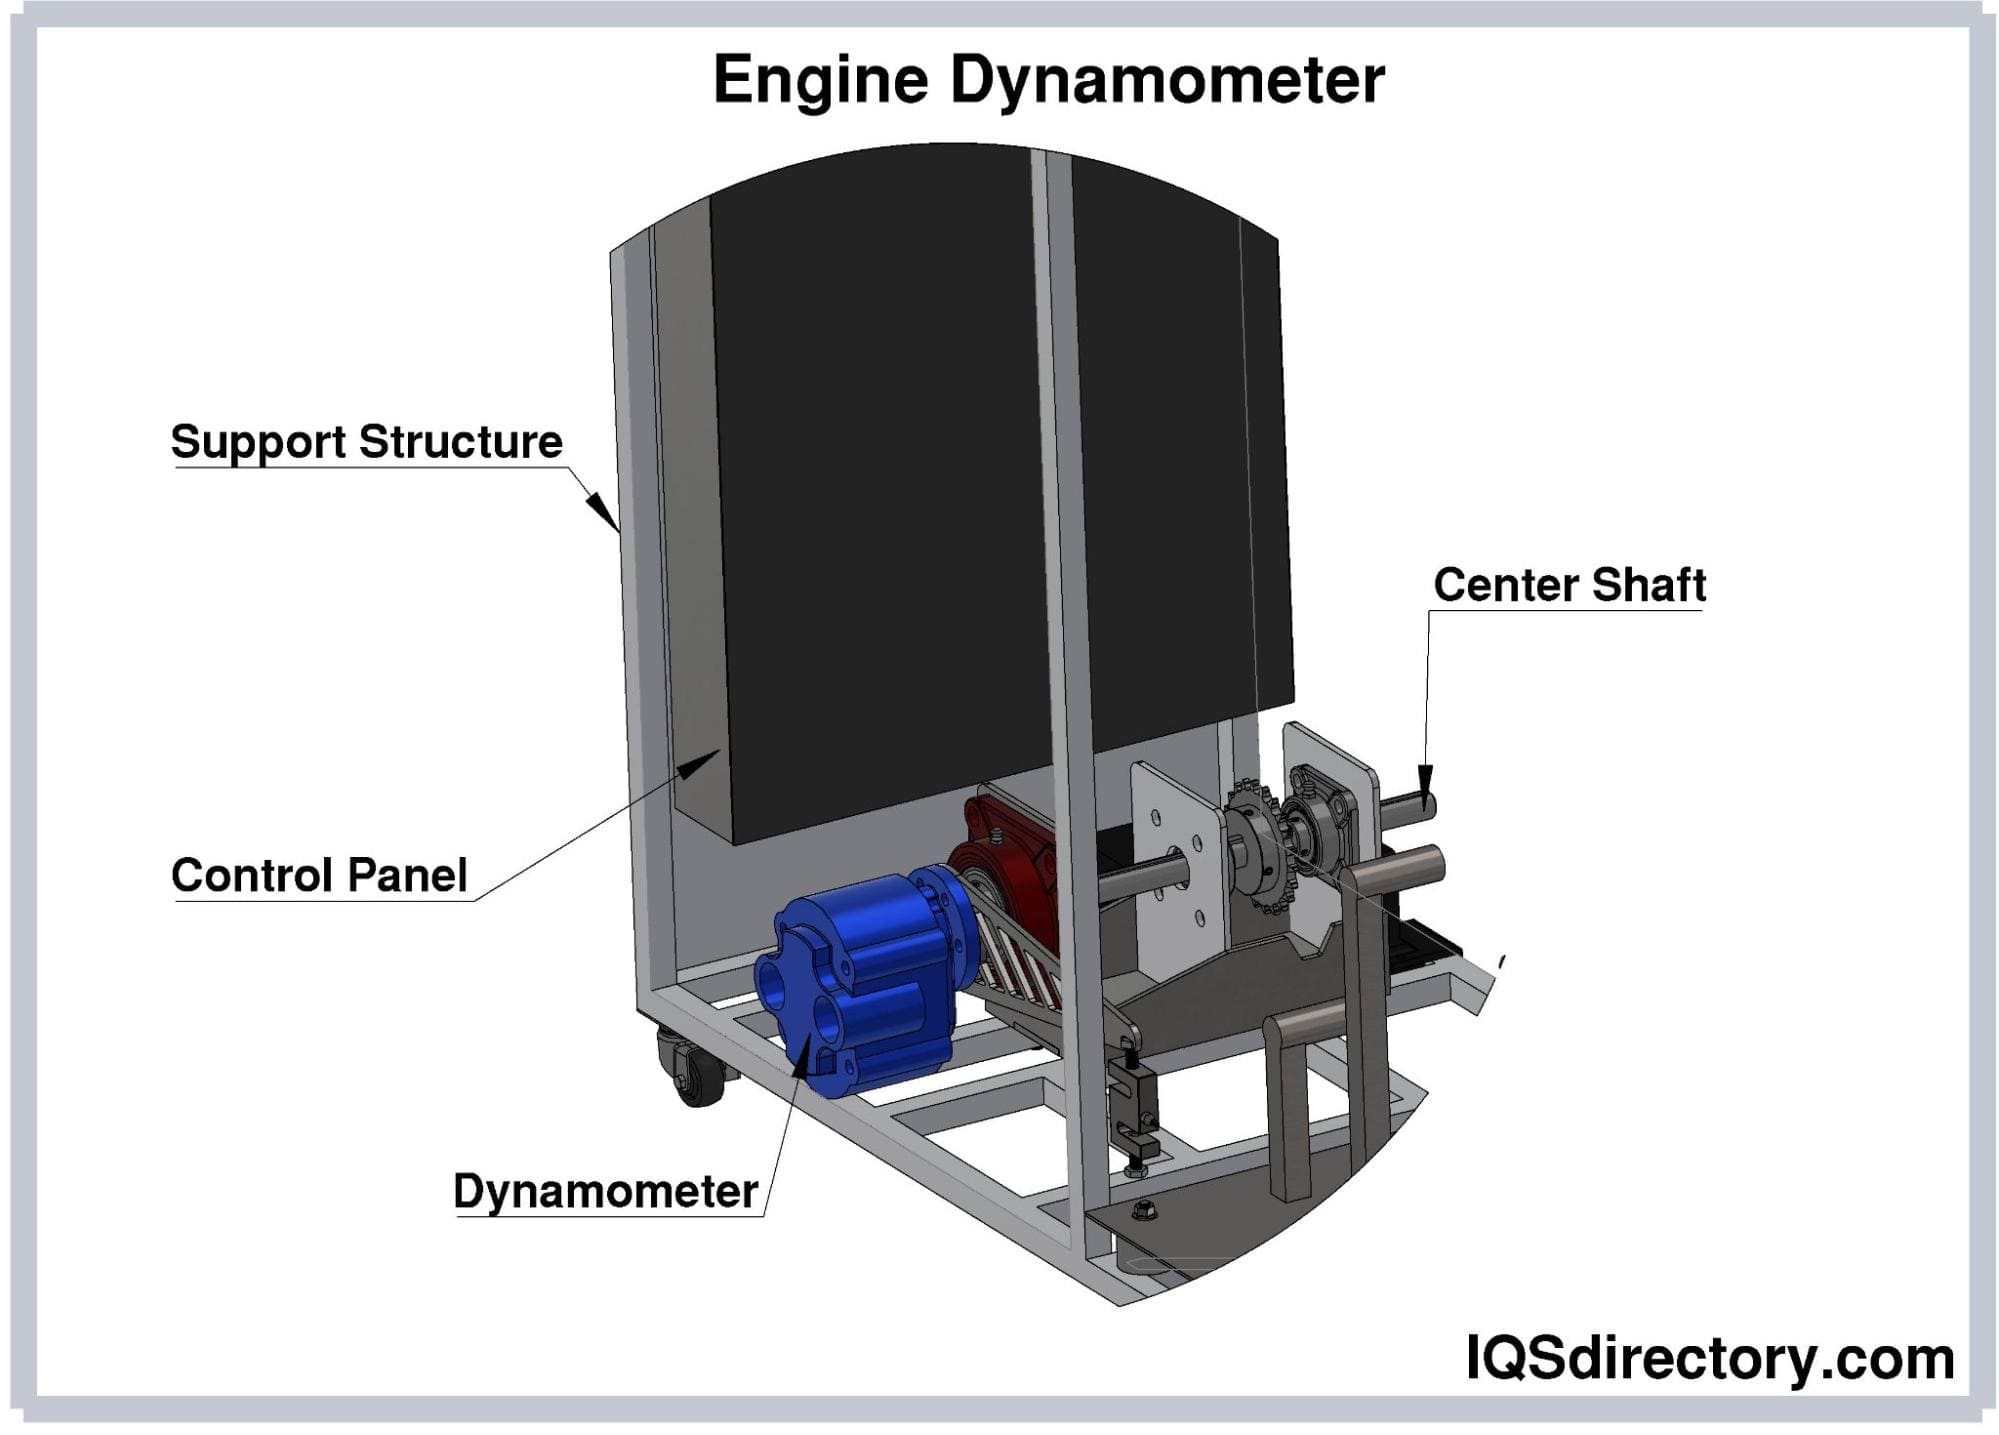 Engine Dynamometer